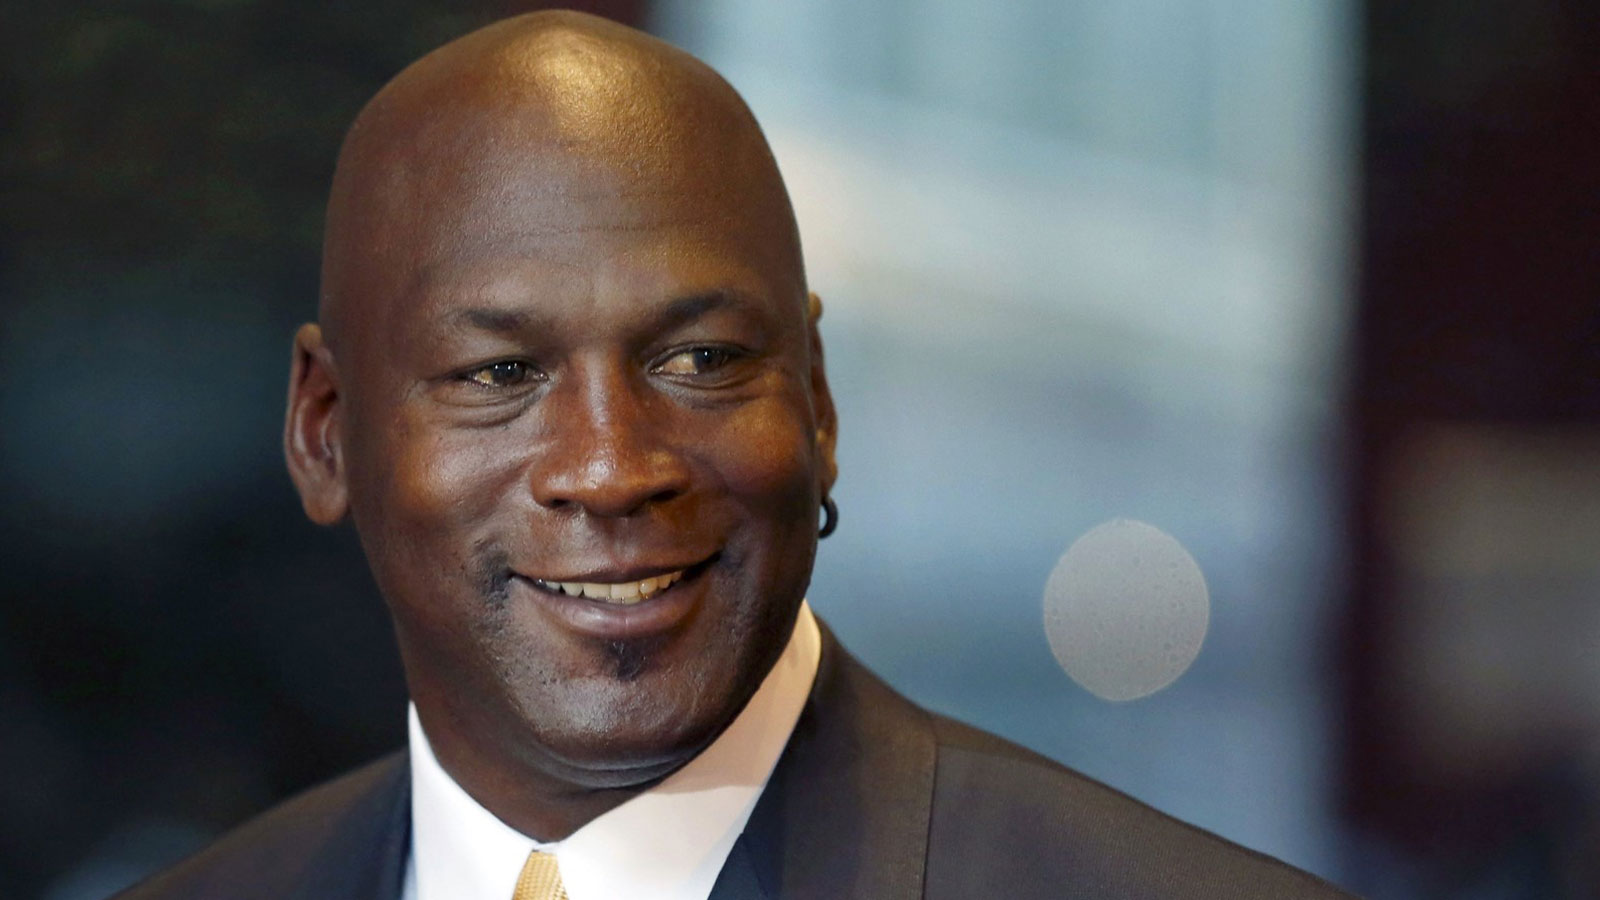 Black Billionaire: Michael Jordan